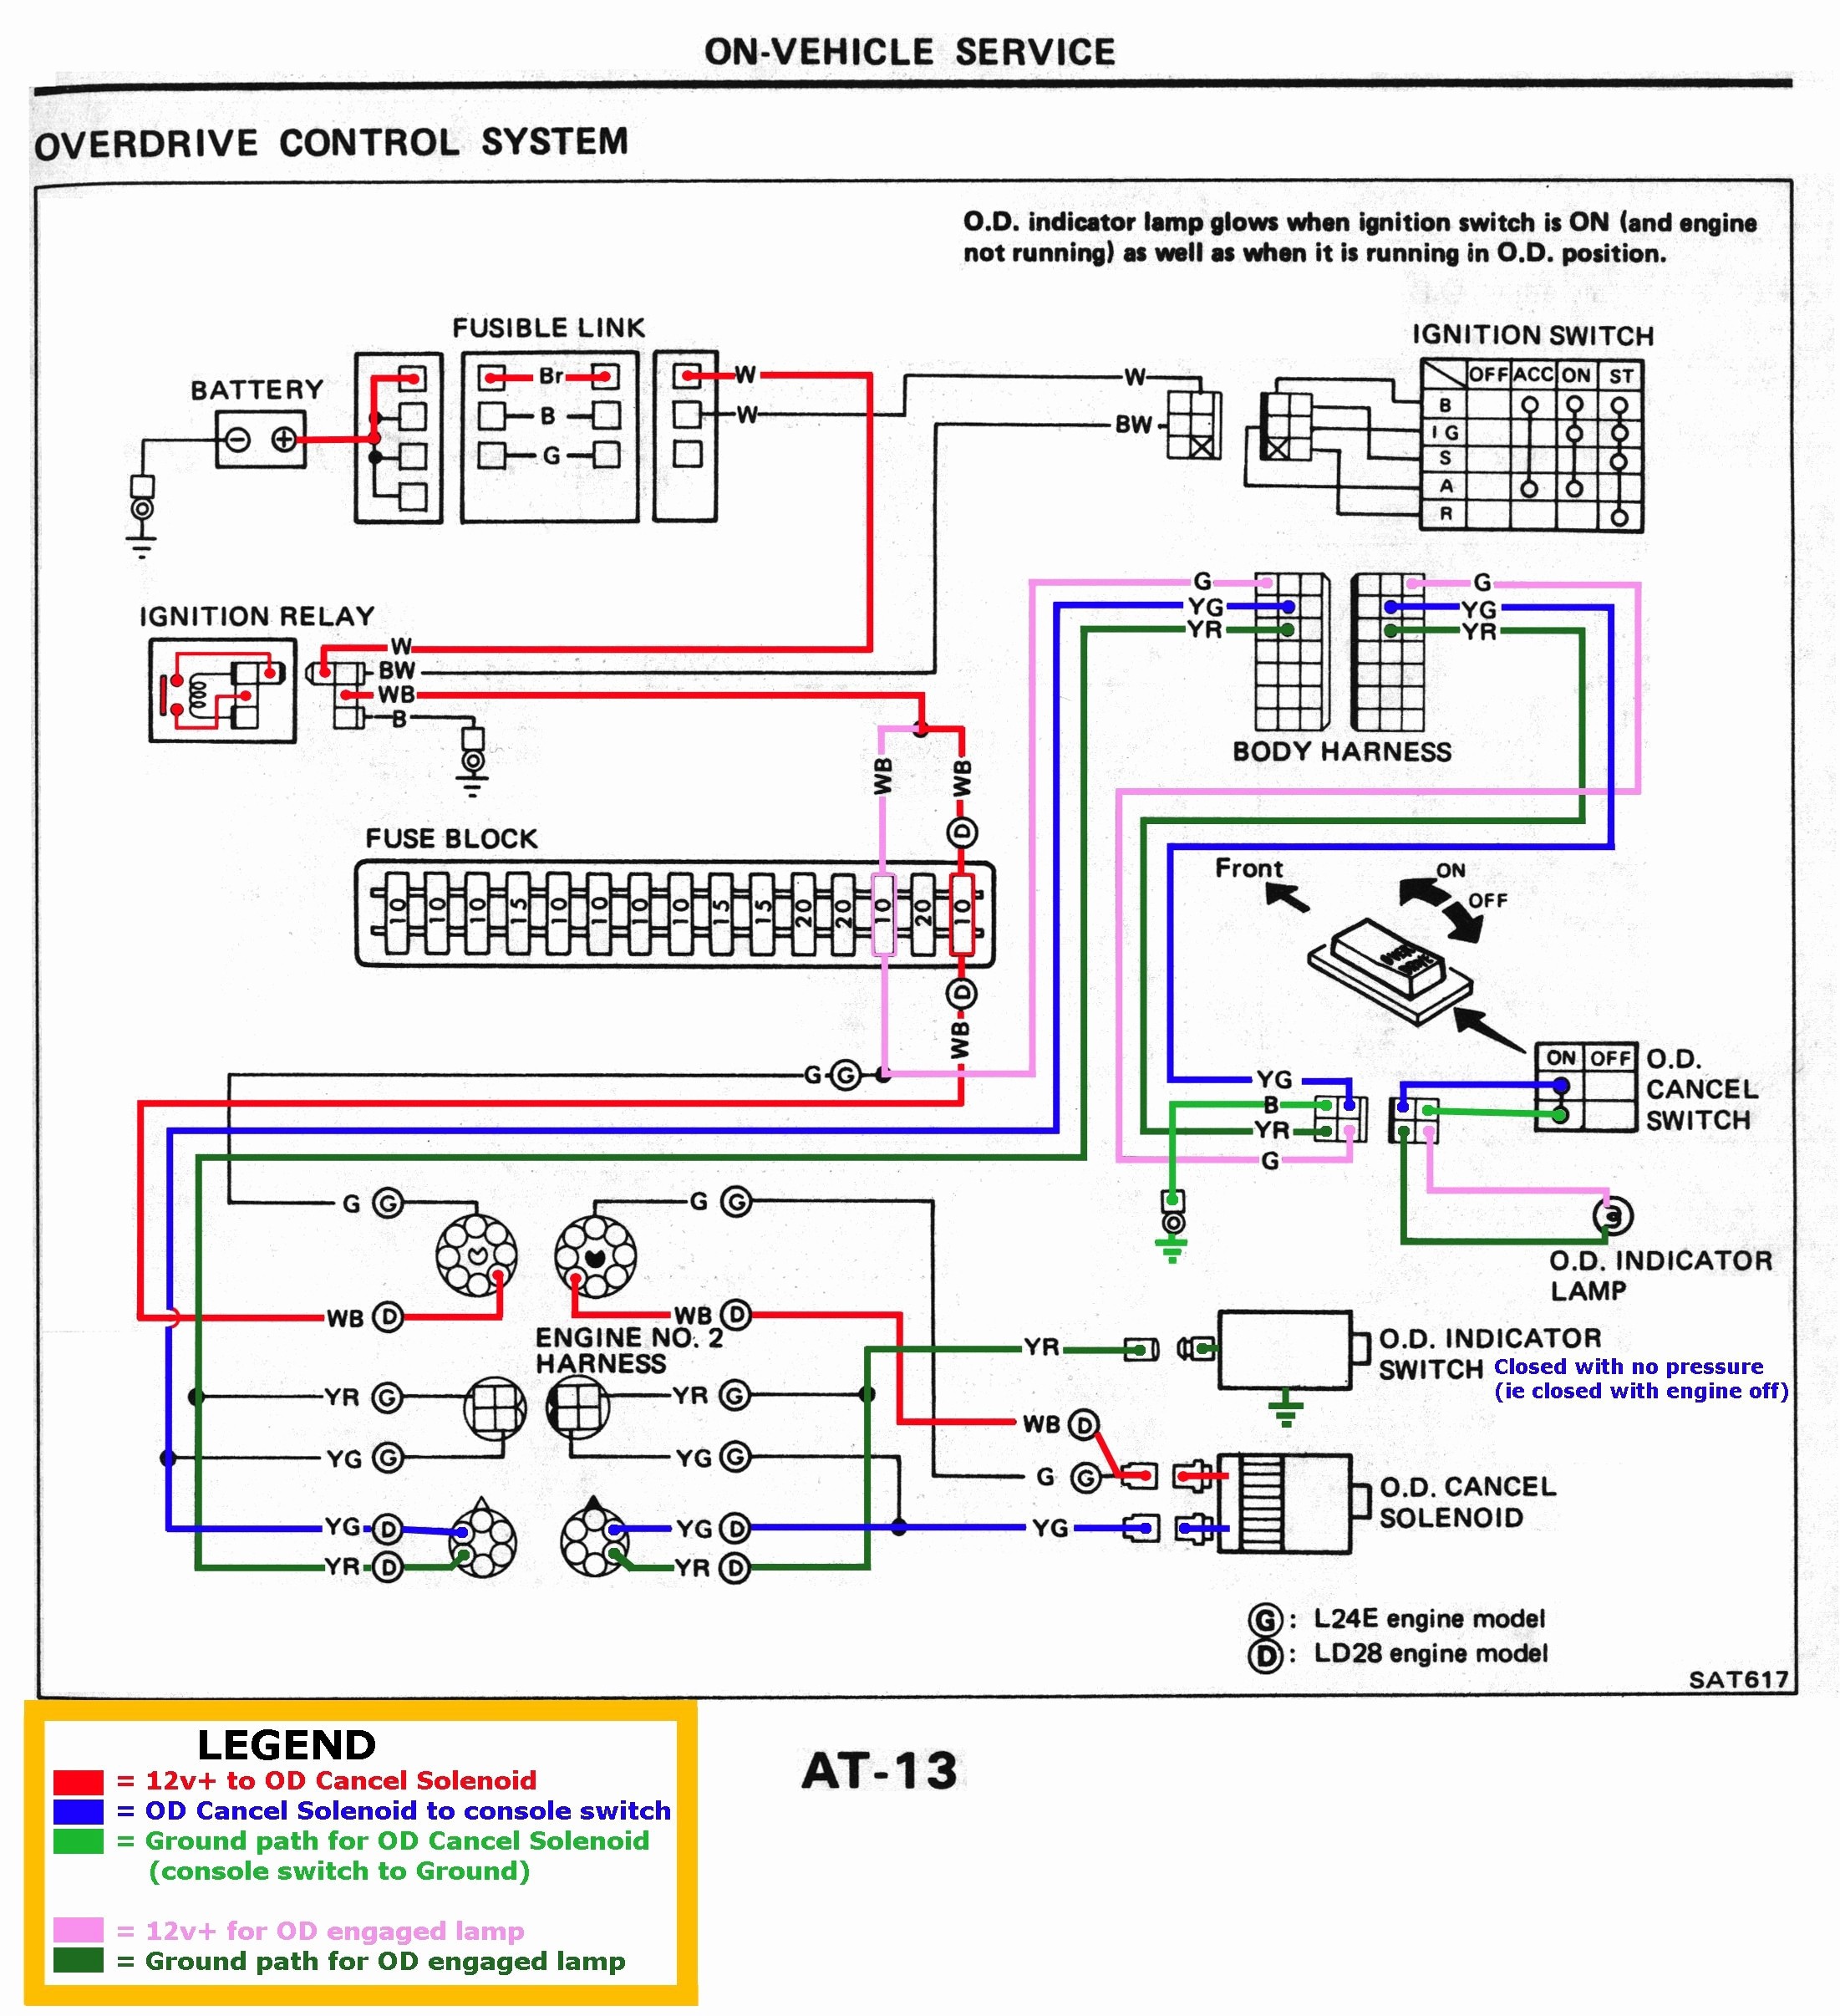 Pressure Switch Wiring Diagram Air pressor 2018 Square D Air Pressor Pressure Switch Wiring Diagram New Wiring